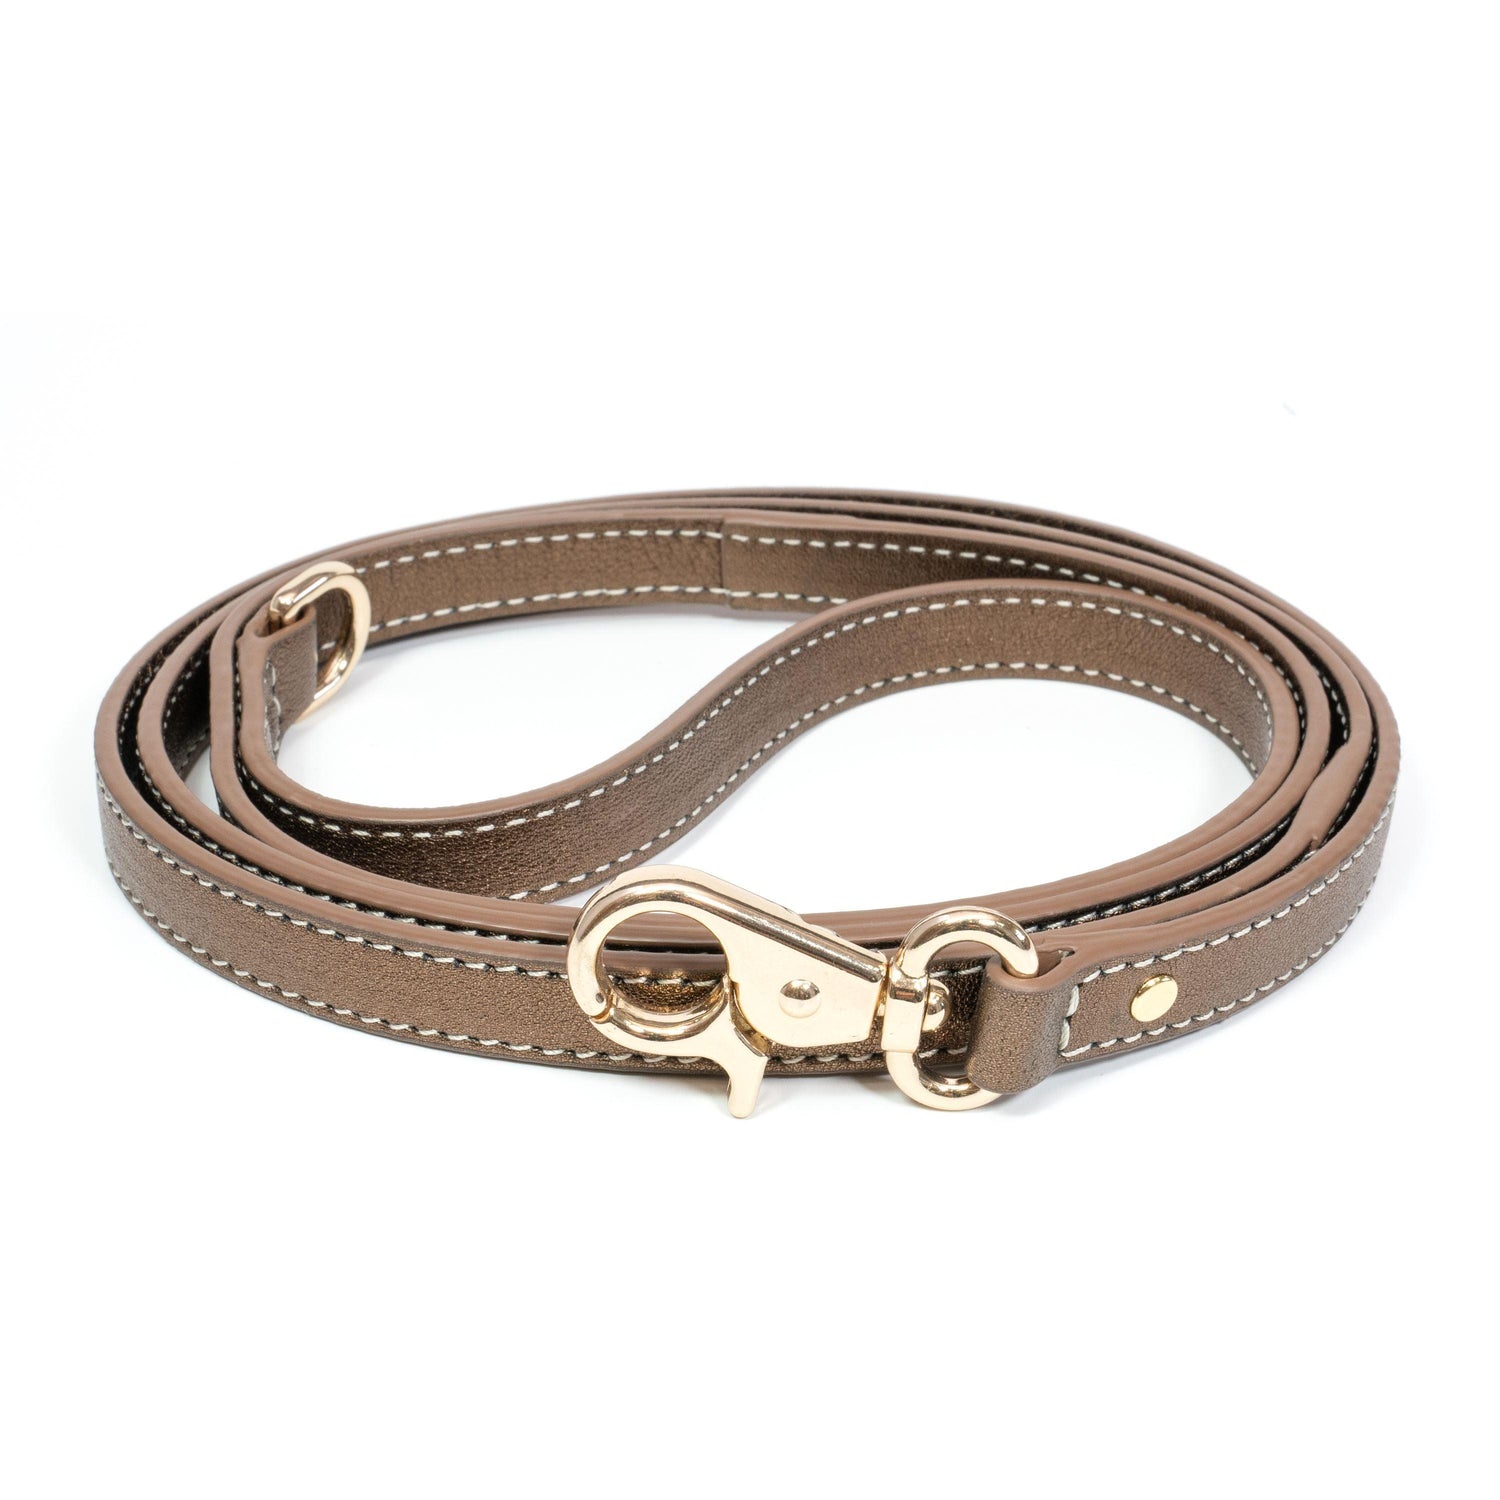 Louis Vuitton Dog Collar and Leash -  UK